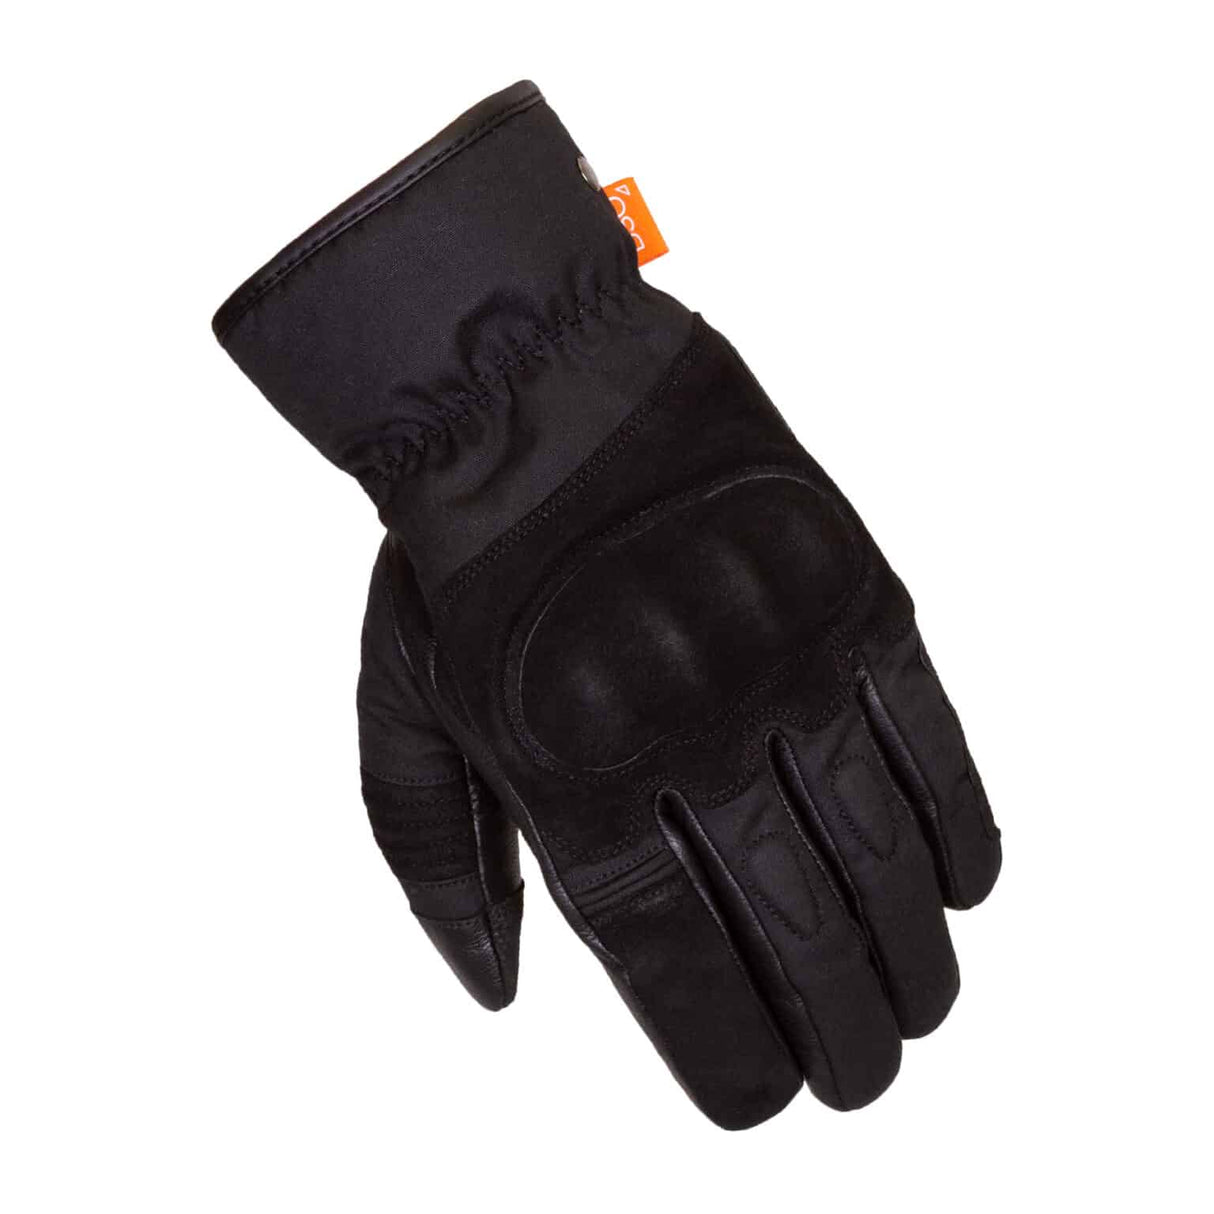 Merlin Ranton II D30 WP Gloves  - Black